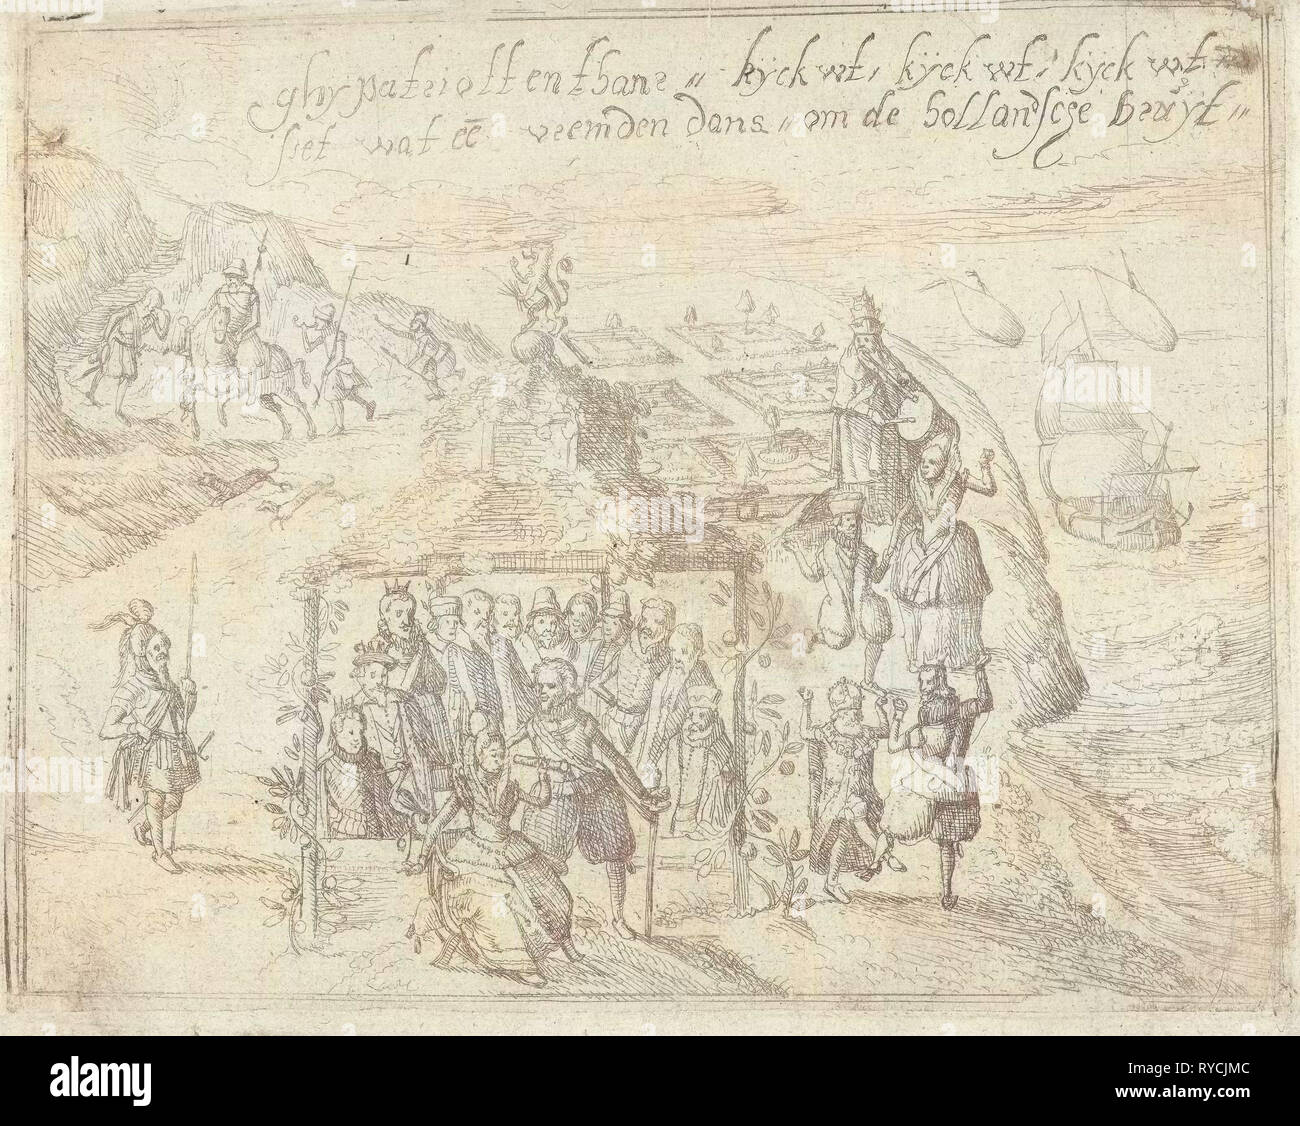 Pour l'impression de titre brochure, Ghy Patriotten thans kijck kijck use, use, Siet wat een vreemden in om de Hollandtsche Bruut, Anonyme, 1615 Banque D'Images